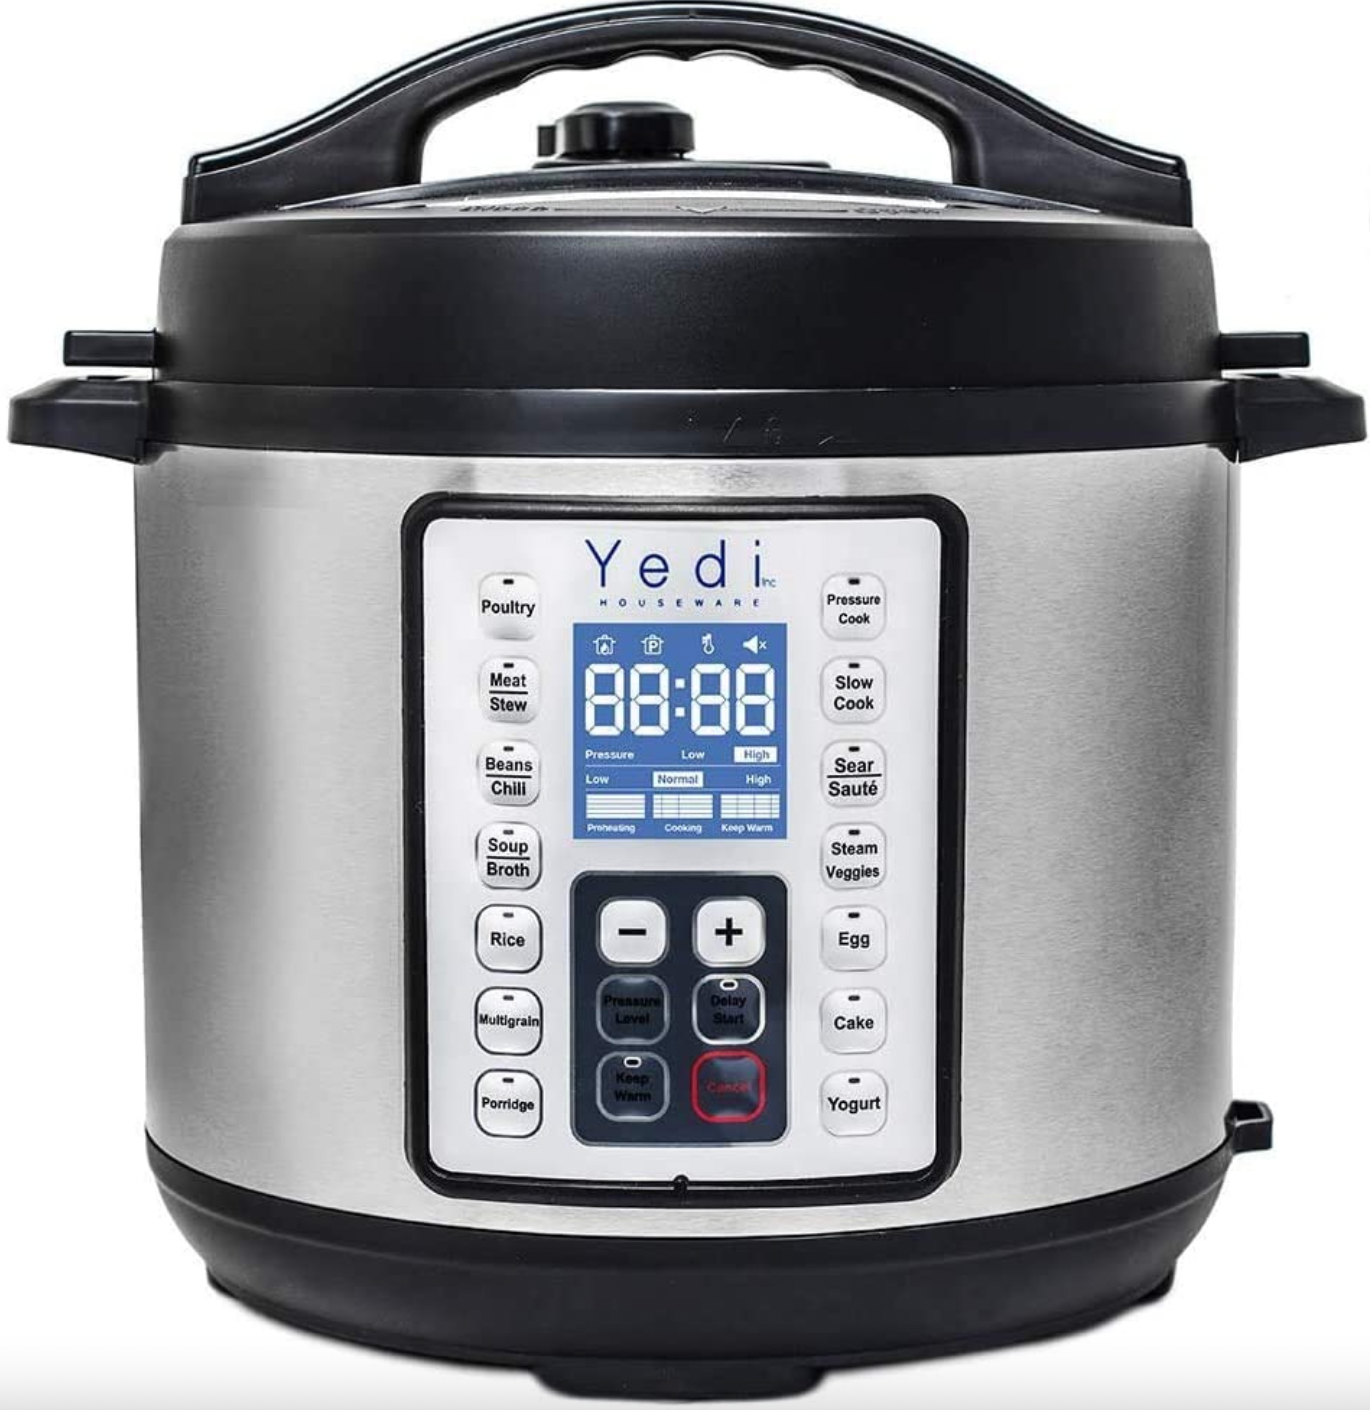 Yedi 9-in-1 Programmable Pressure Cooker